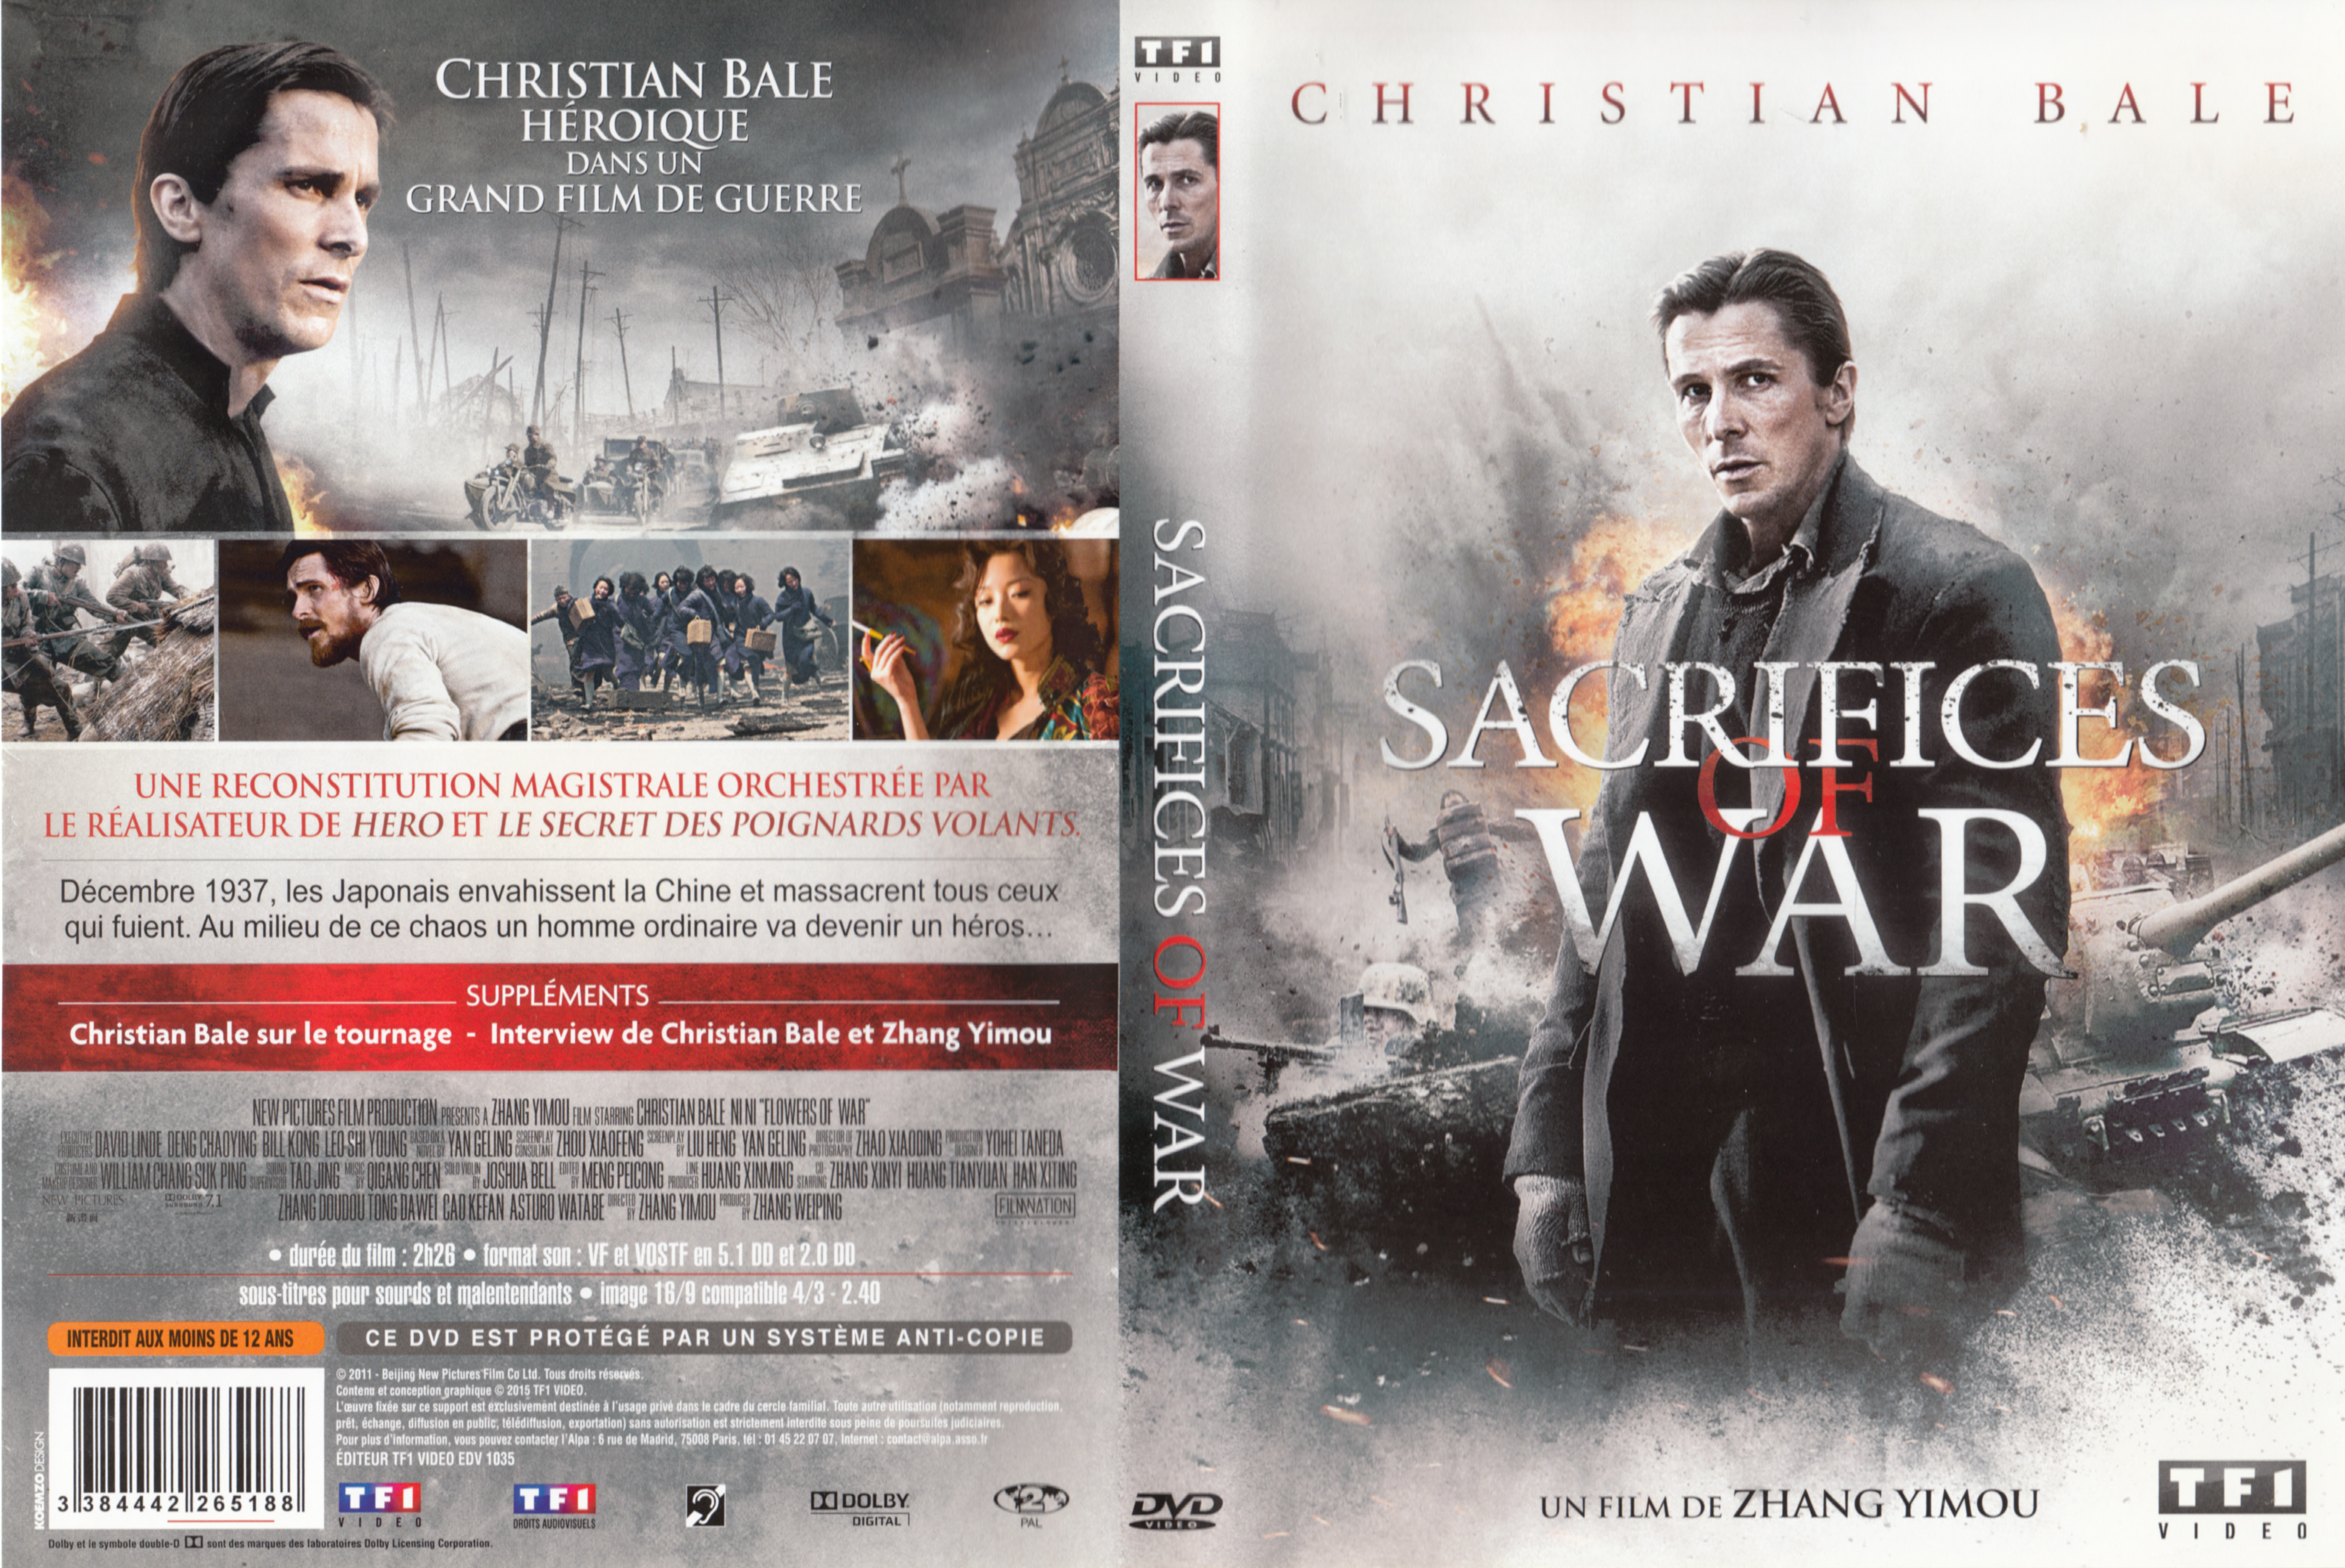 Jaquette DVD Sacrifices of war v2